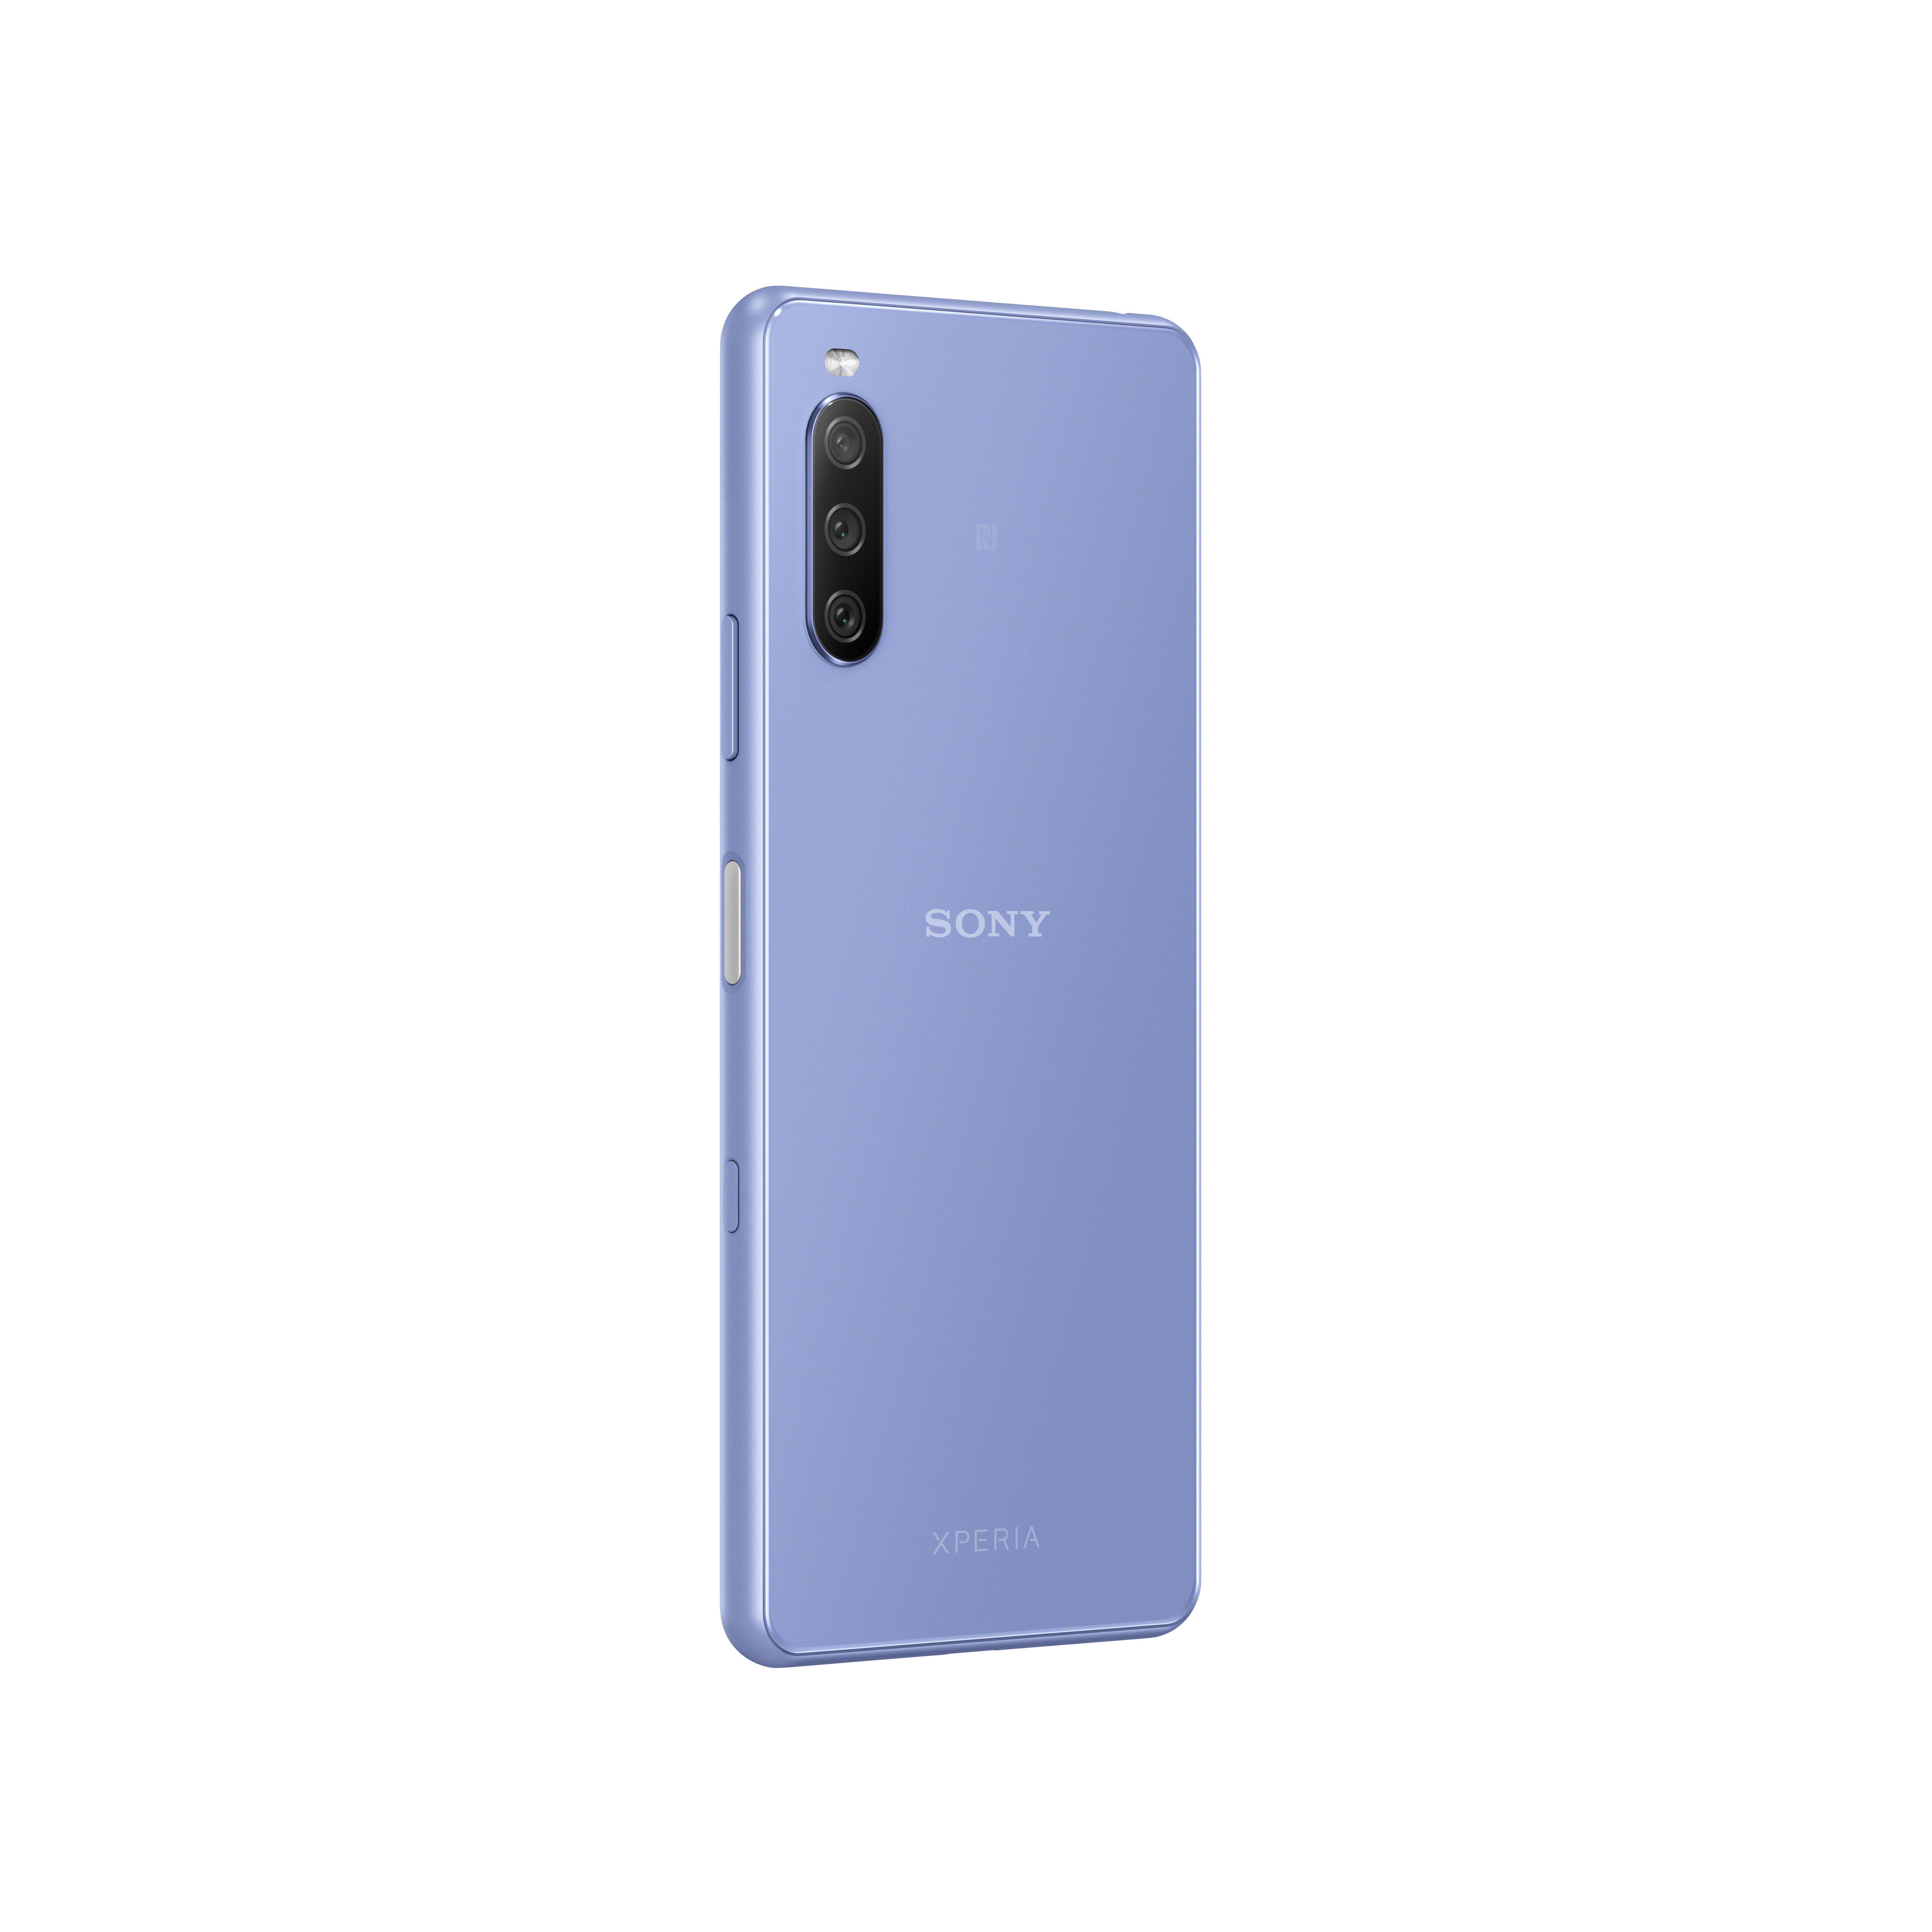 SONY Xperia 10 GB Blau SIM 128 III 21:9 Display Dual 5G